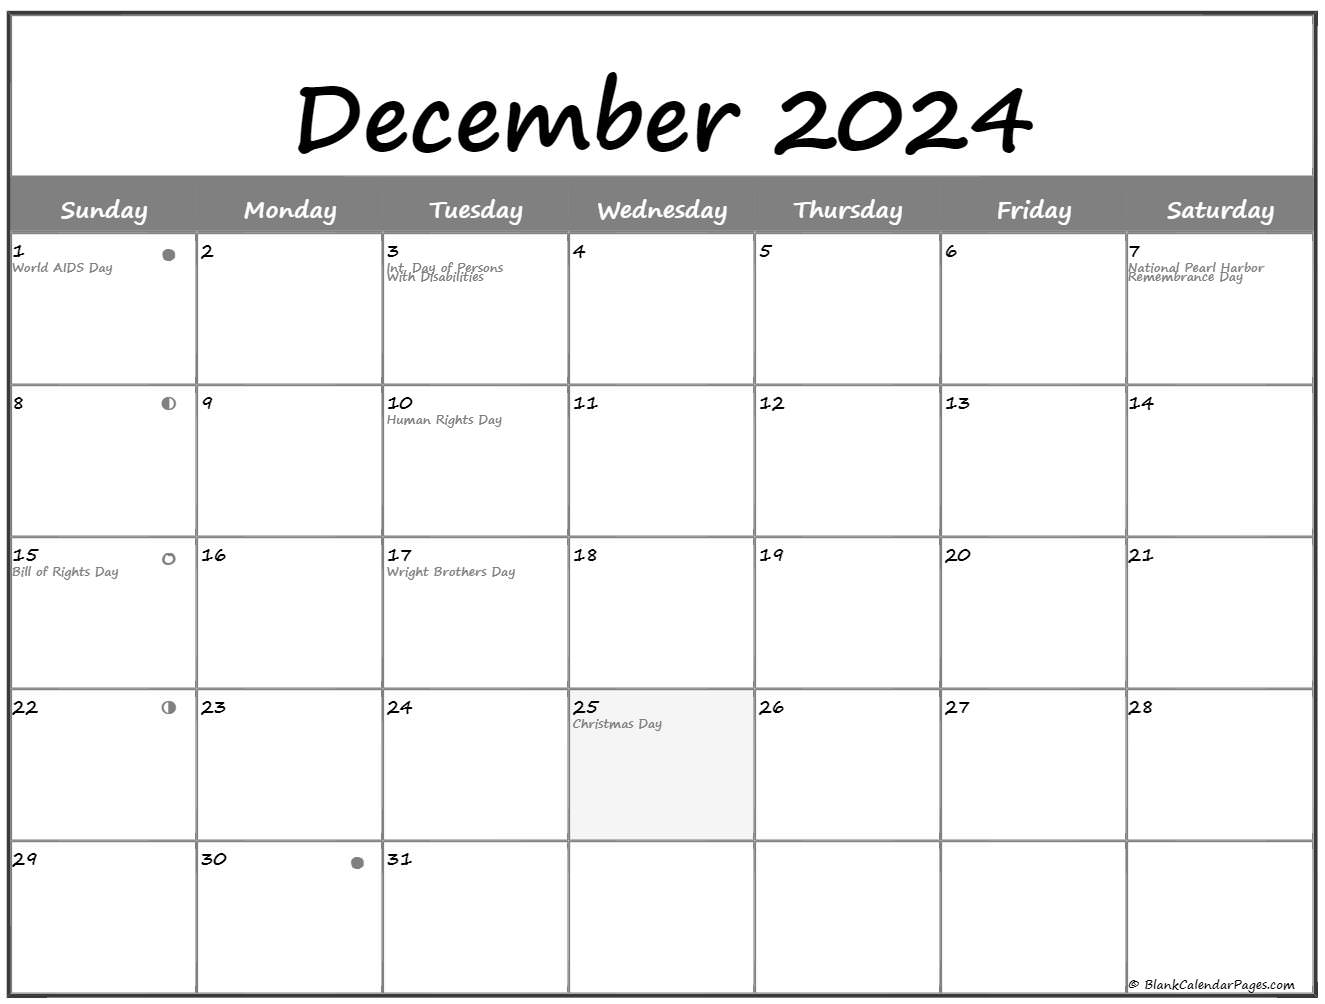 December 2024 Lunar Calendar Moon Phase Calendar